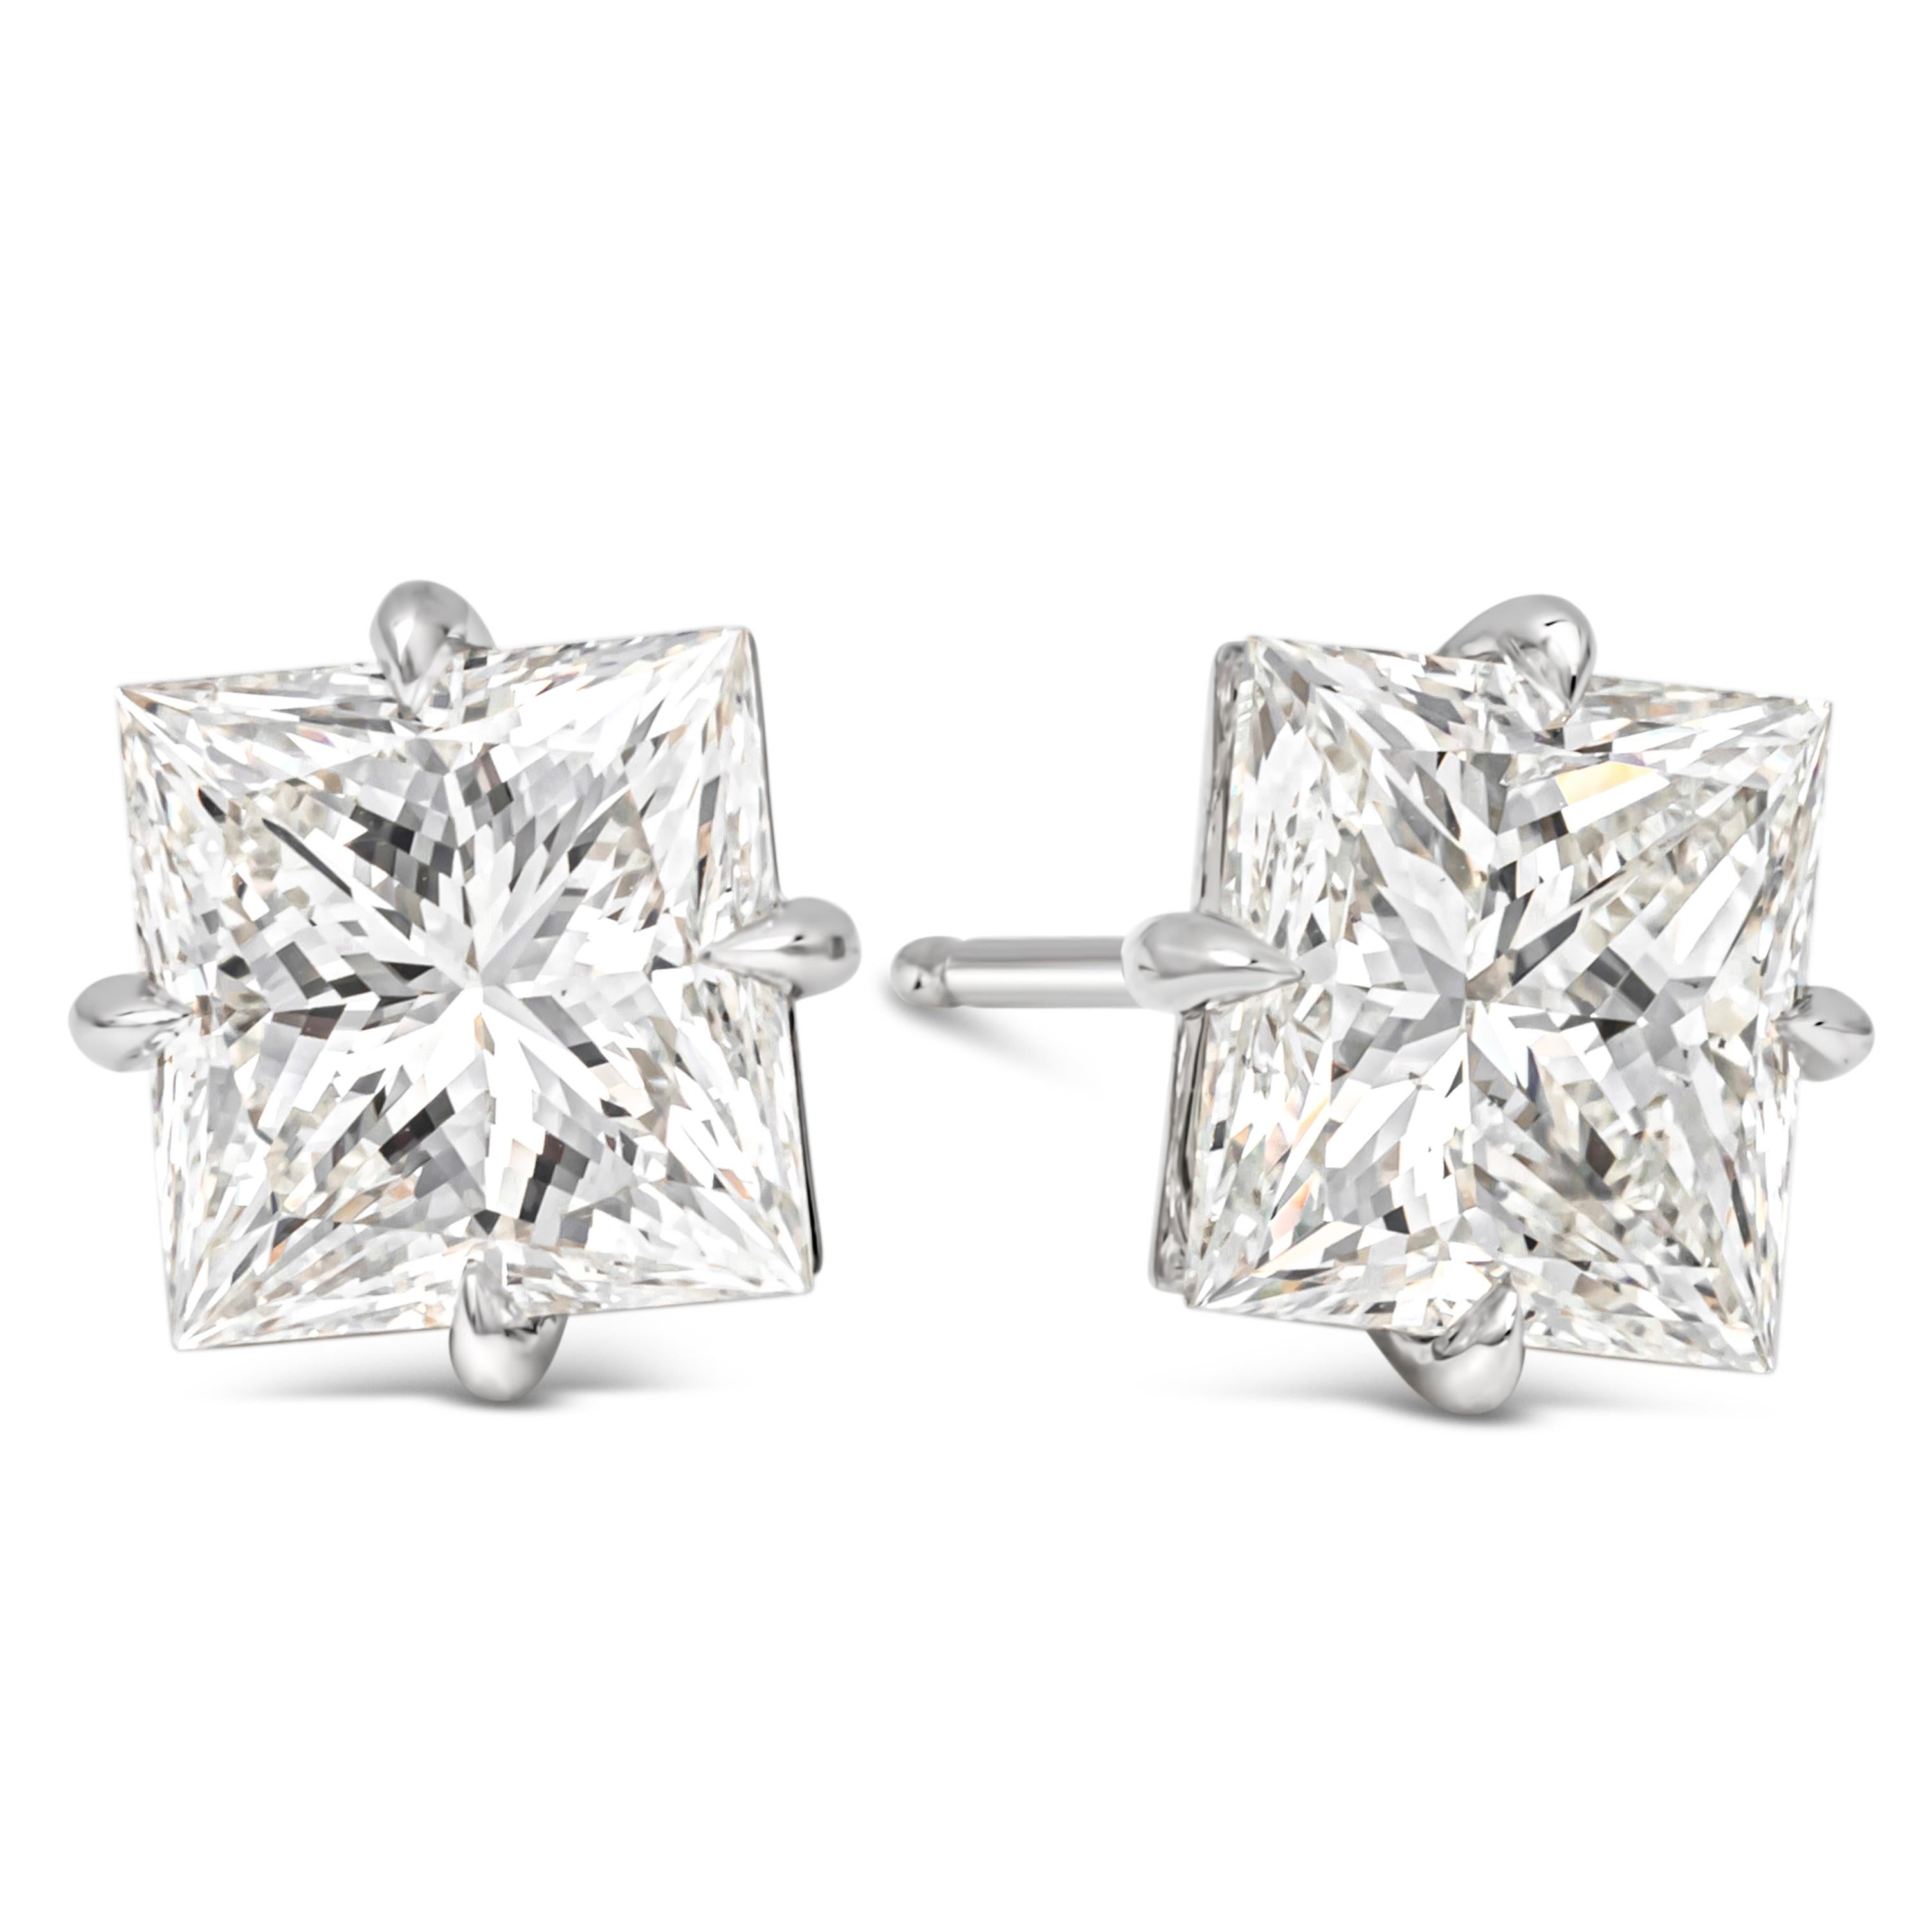 Contemporary Roman Malakov GIA Certified 6.07 Carats Total Princess Cut Diamond Stud Earrings For Sale